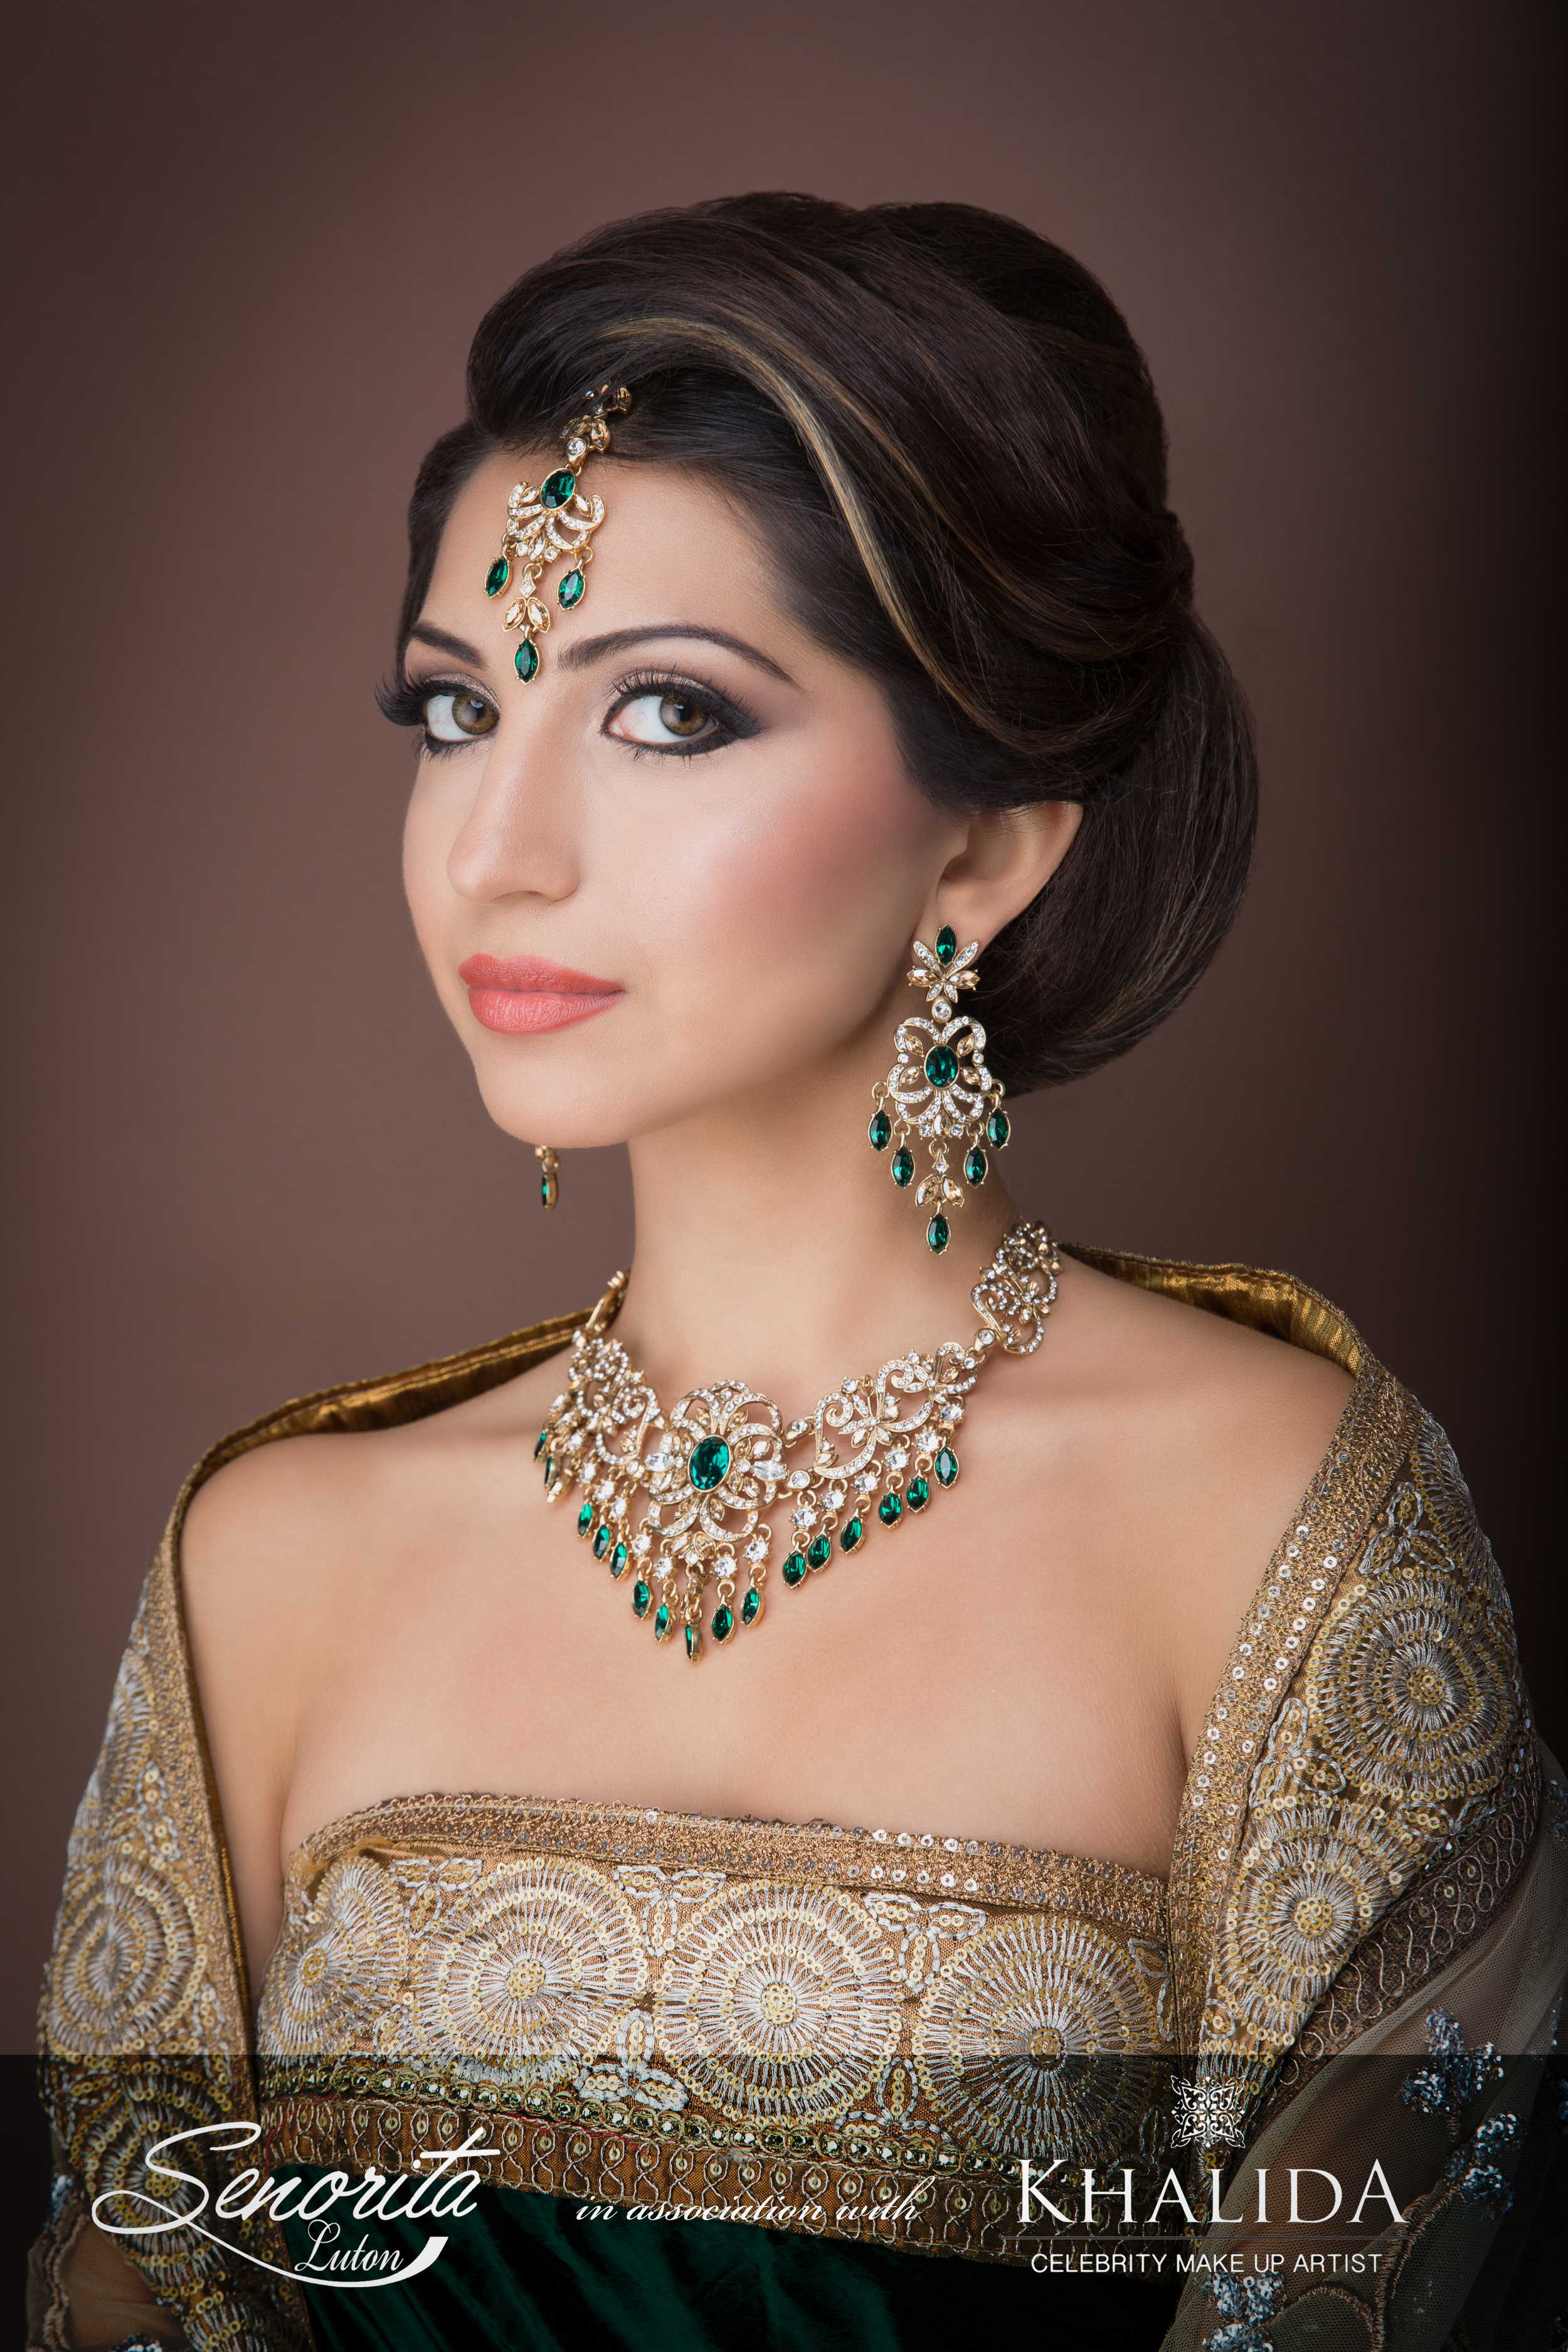  Model: &nbsp;Priyanka  Makeup: Khalida Makeup Artist  Client: Seno Rita (Senorita)  Stylist: Haroon 